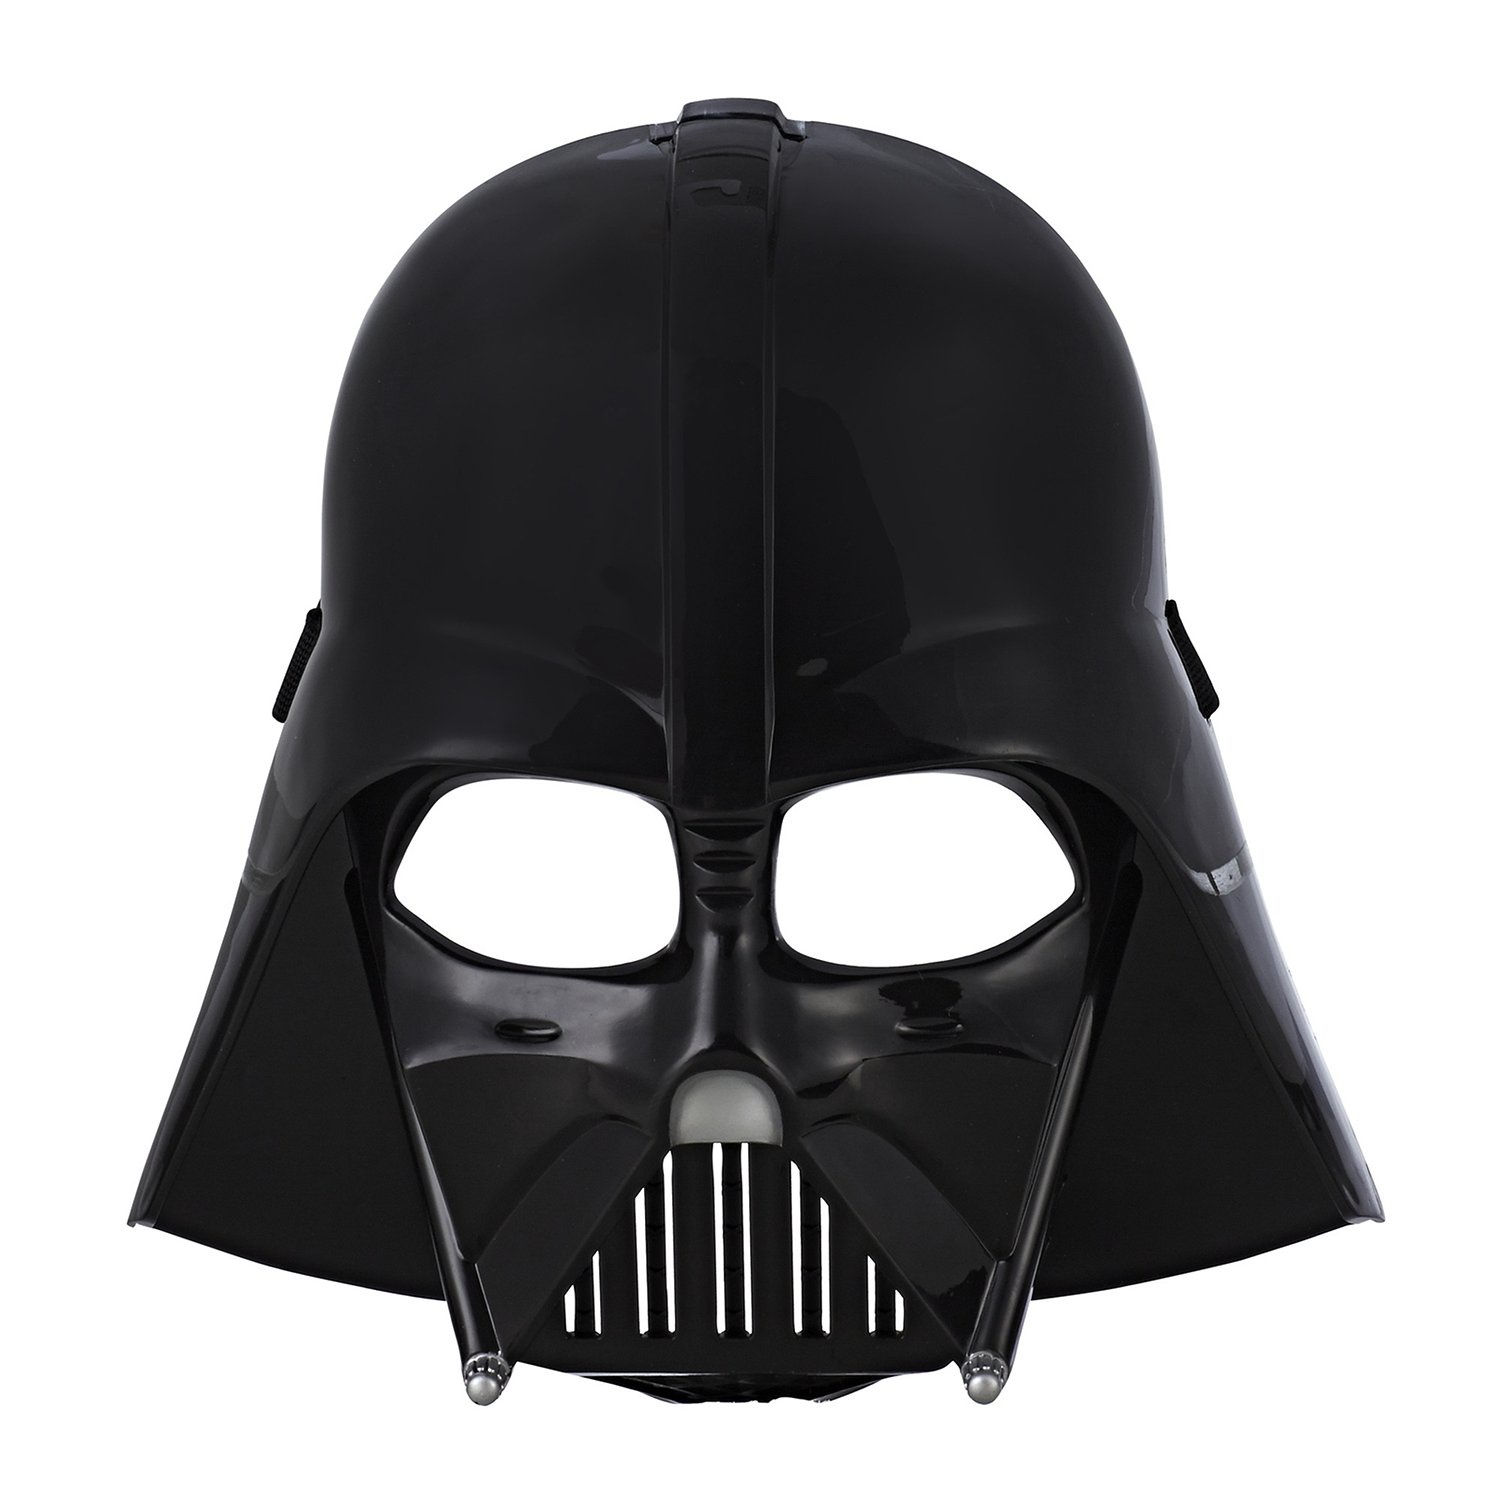 Маска звездные войны дарт. Маска Darth Vader. Star Wars маска Дартвейдера. Шлем Darth Vader Hasbro. Шлем Дарта Вейдера Хасбро.